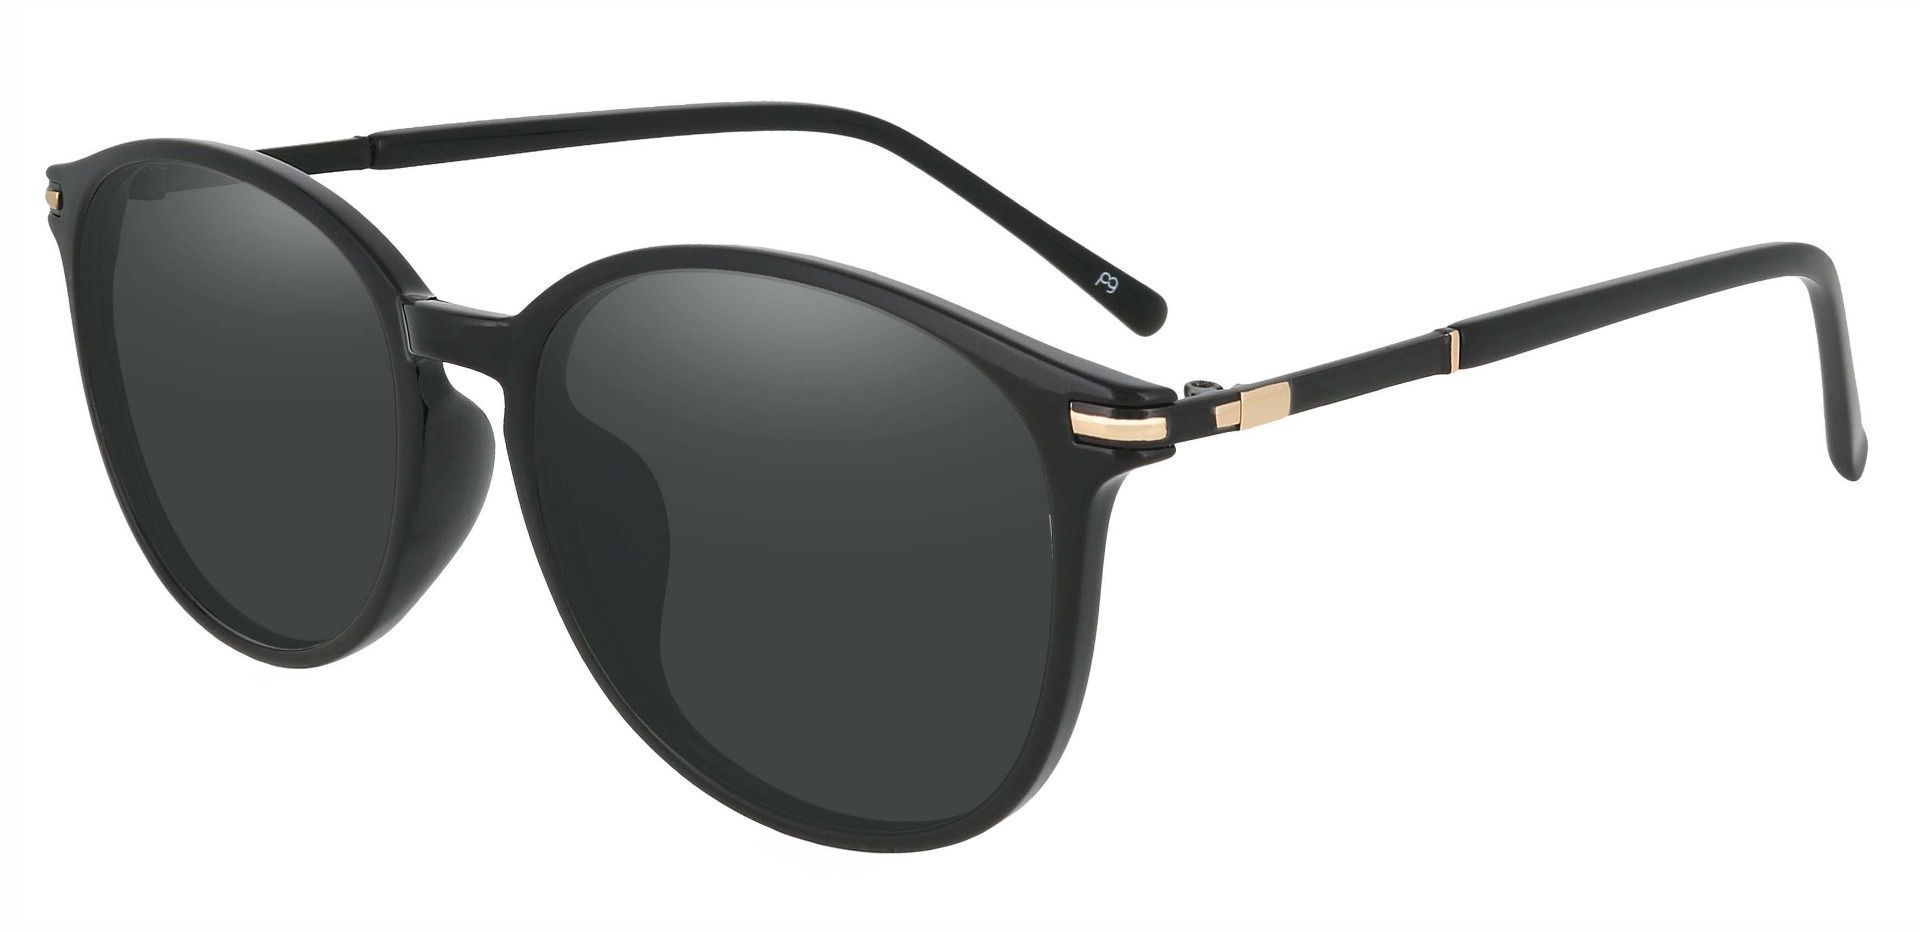 Danbury Oval Progressive Sunglasses - Black Frame With Gray Lenses